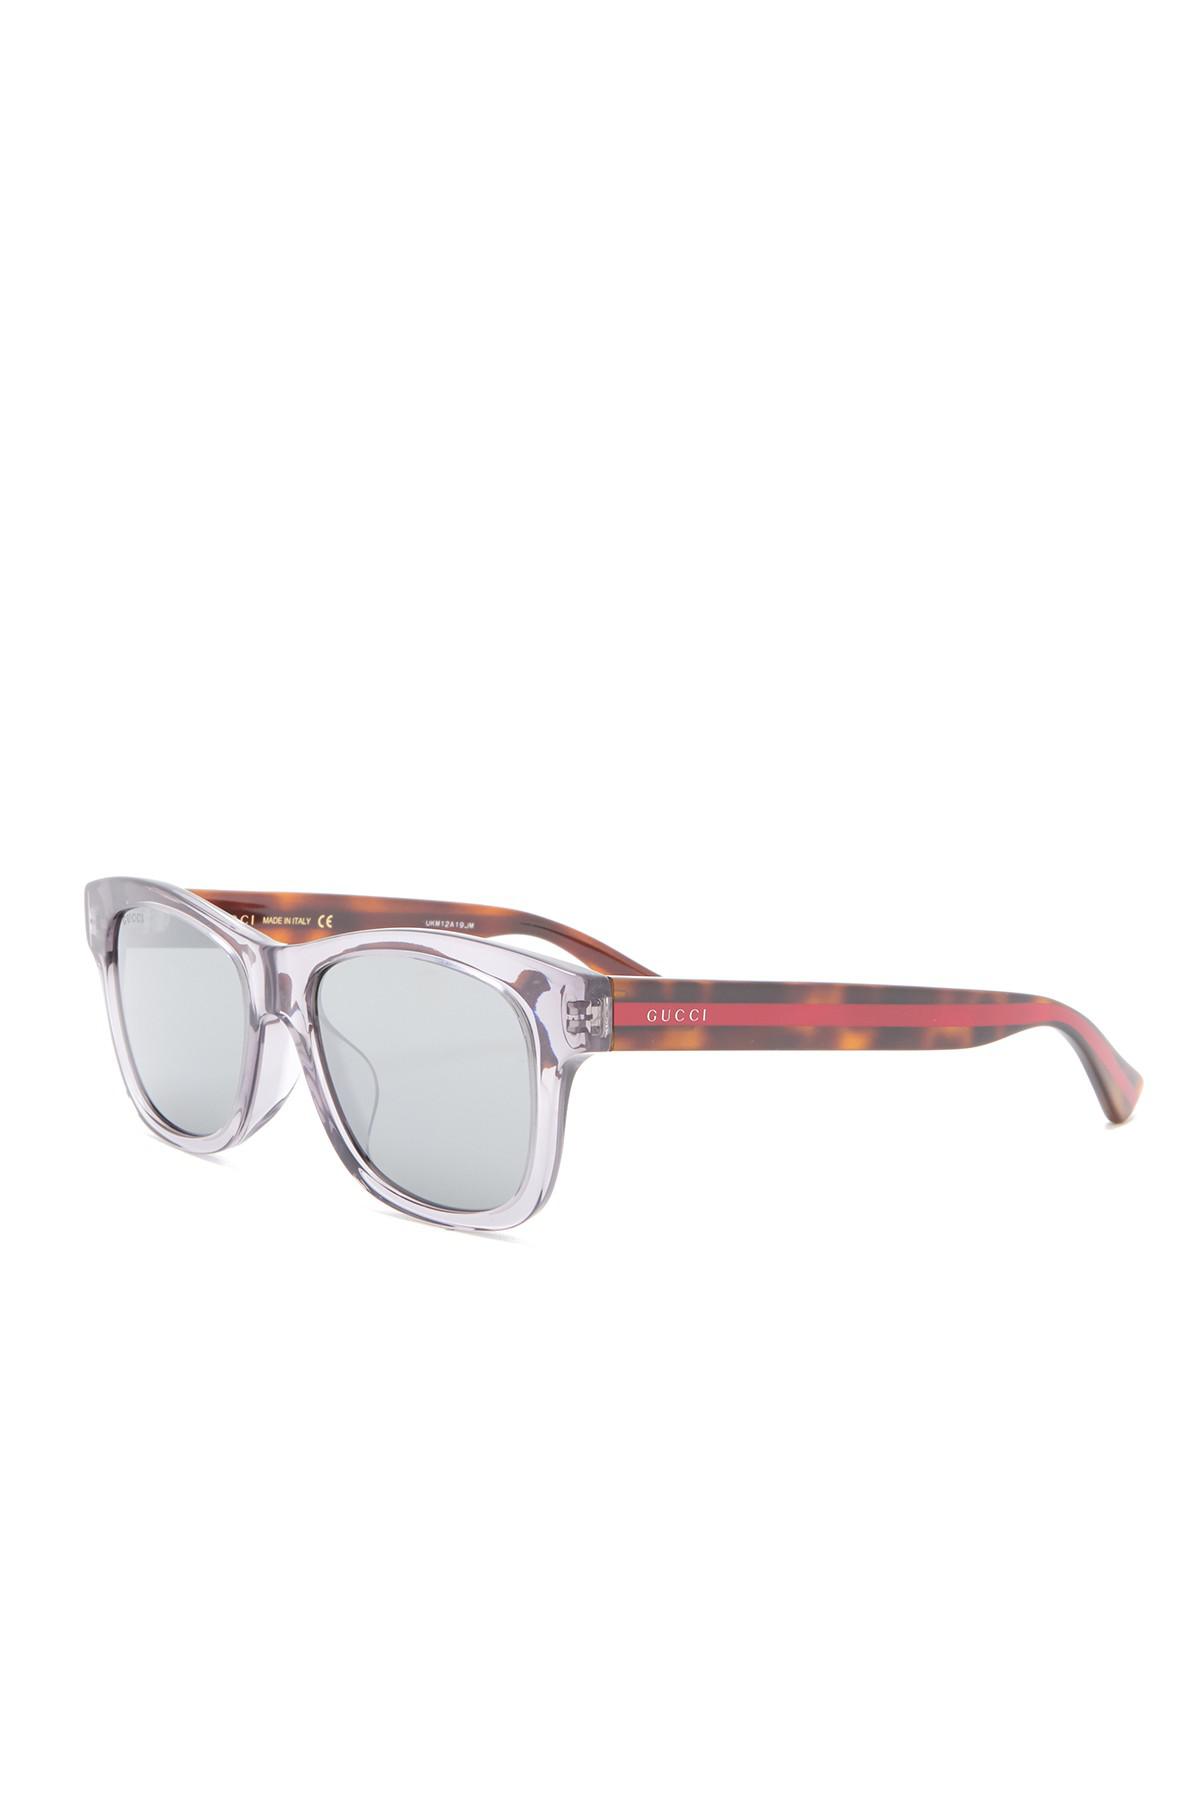 gucci 53mm rectangle sunglasses